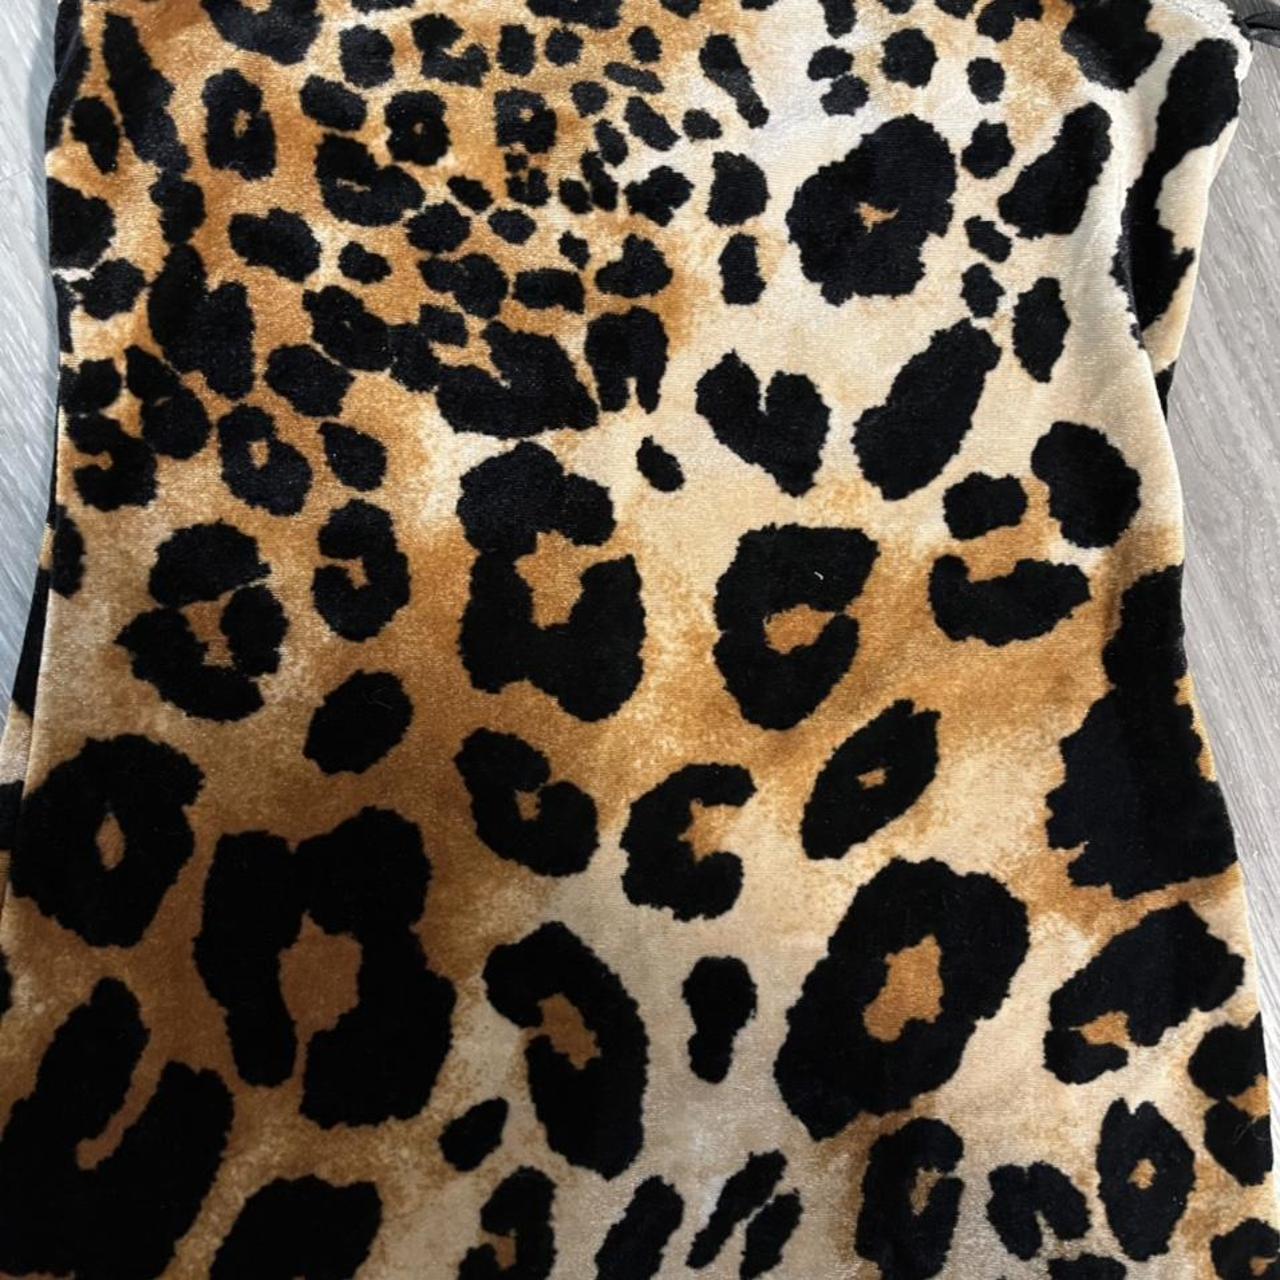 Product Image 2 - Now listing: Velvet cheetah print